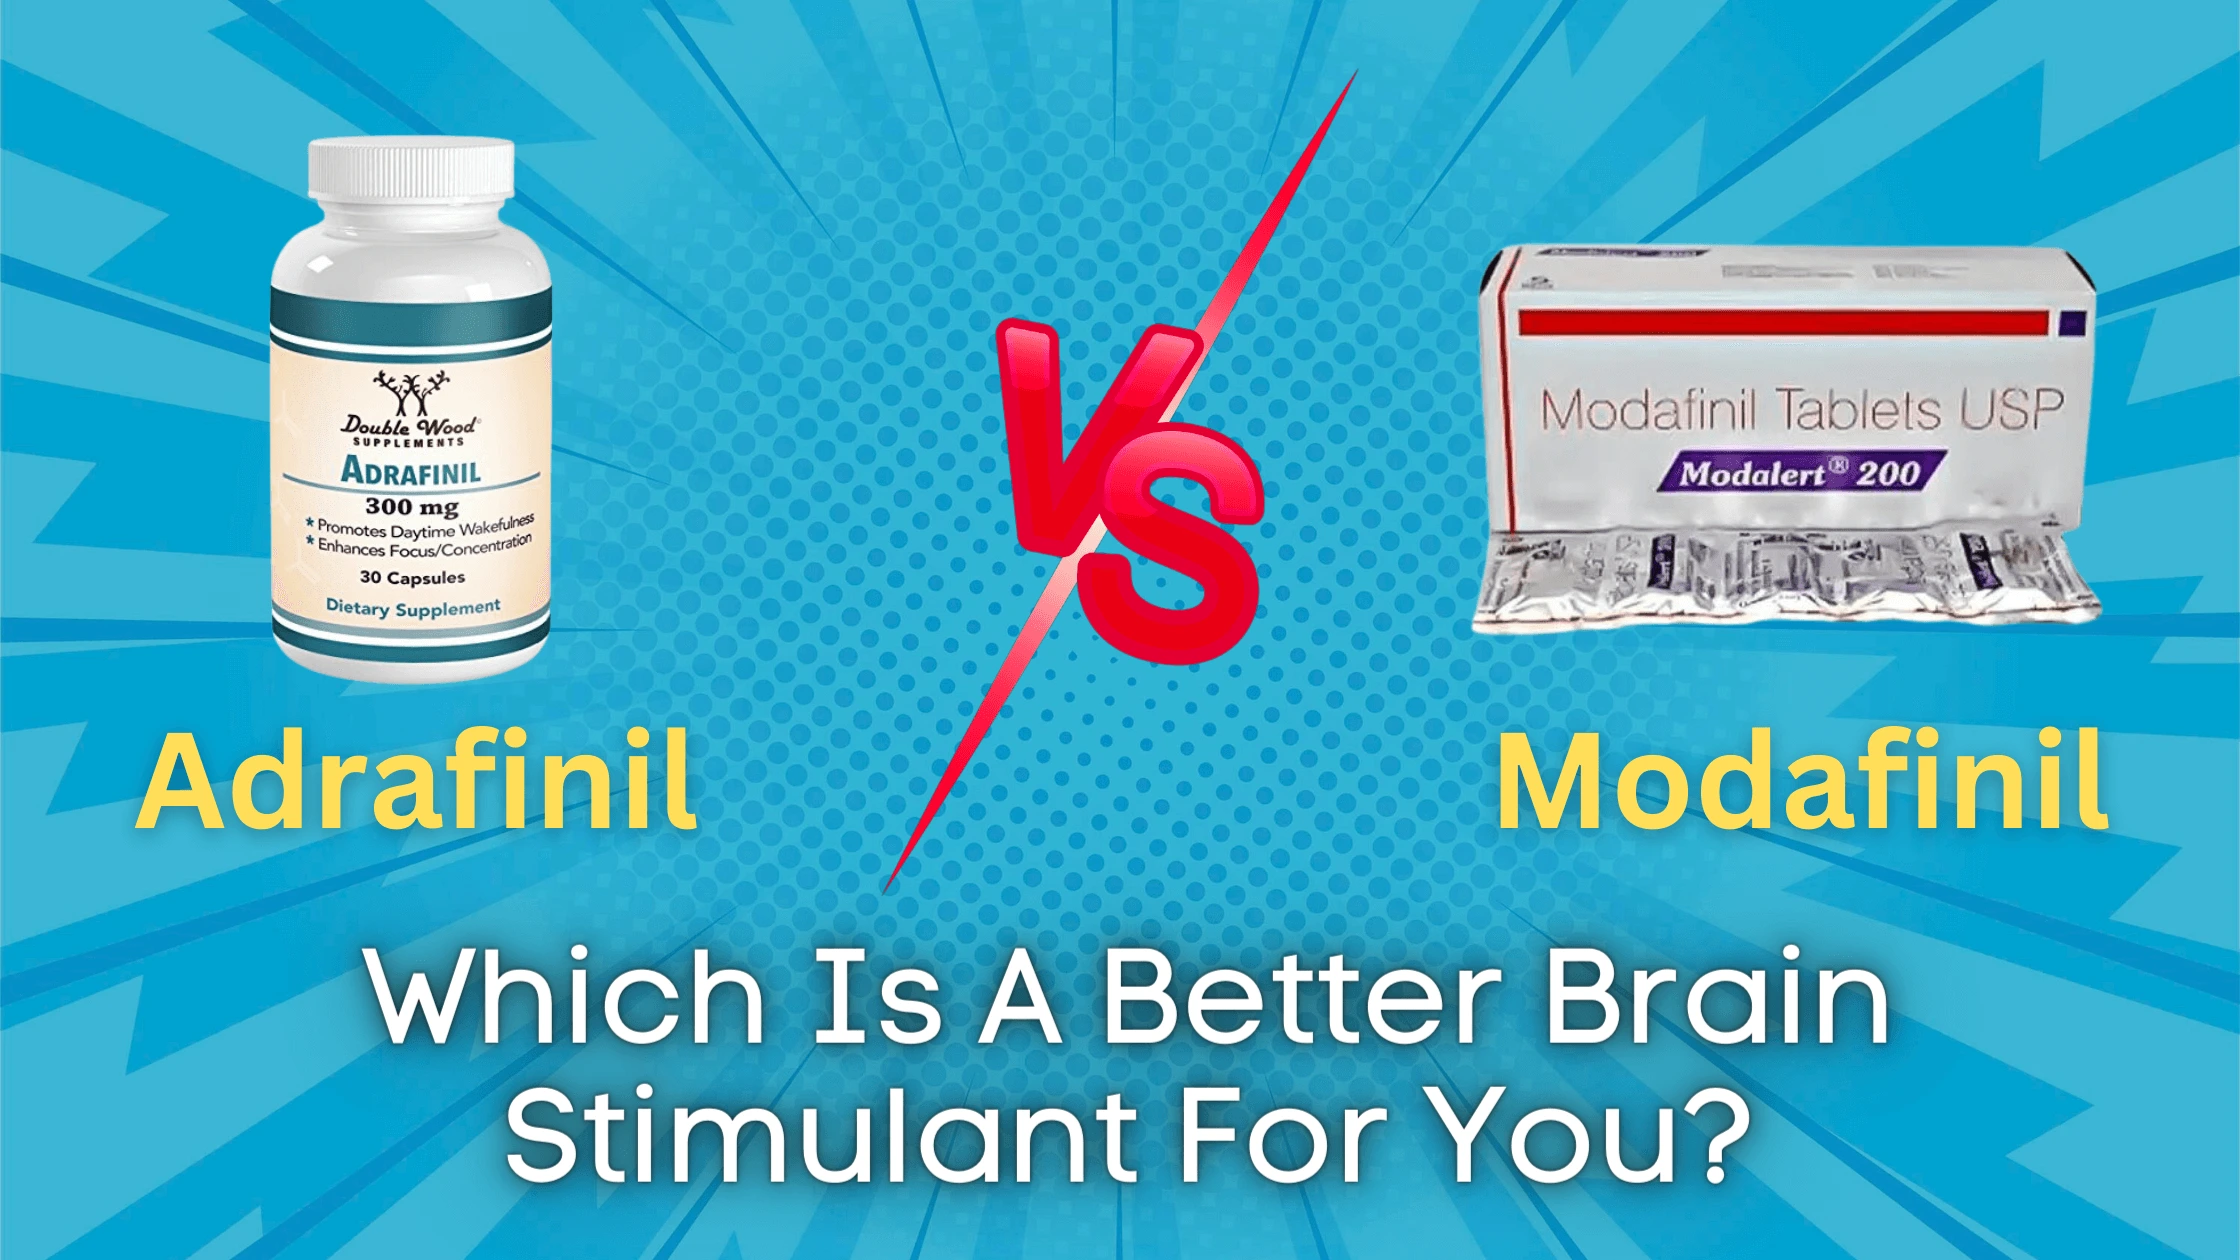 Adrafinil Vs Modafinil- Which Is A Better Brain Stimulant For You?